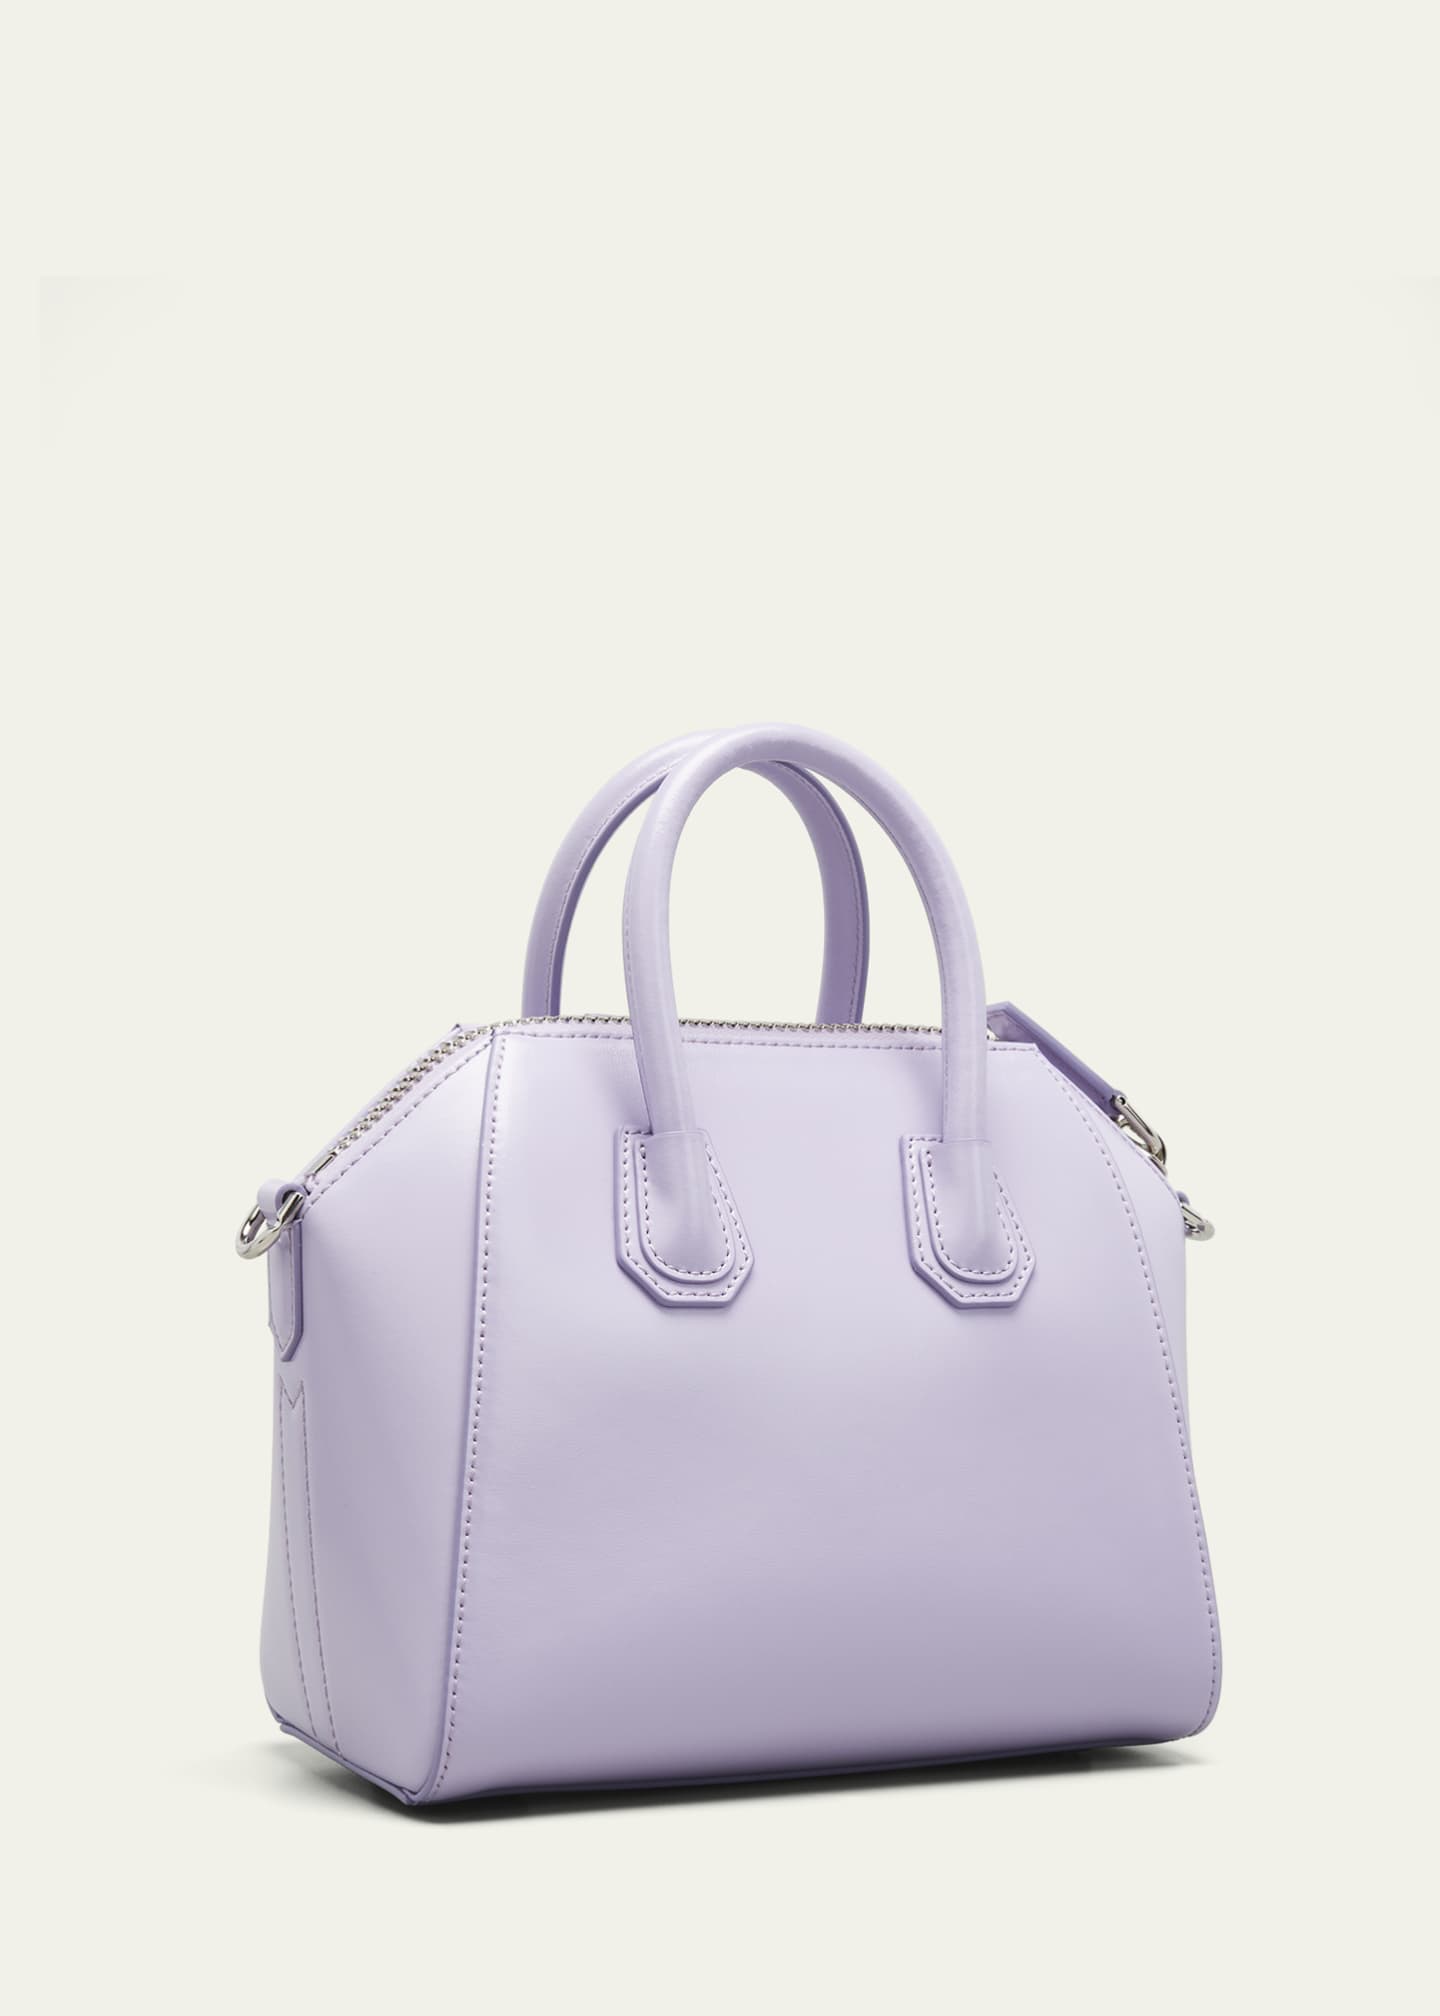 Givenchy Antigona Mini Top Handle Bag in Box Leather - Bergdorf Goodman